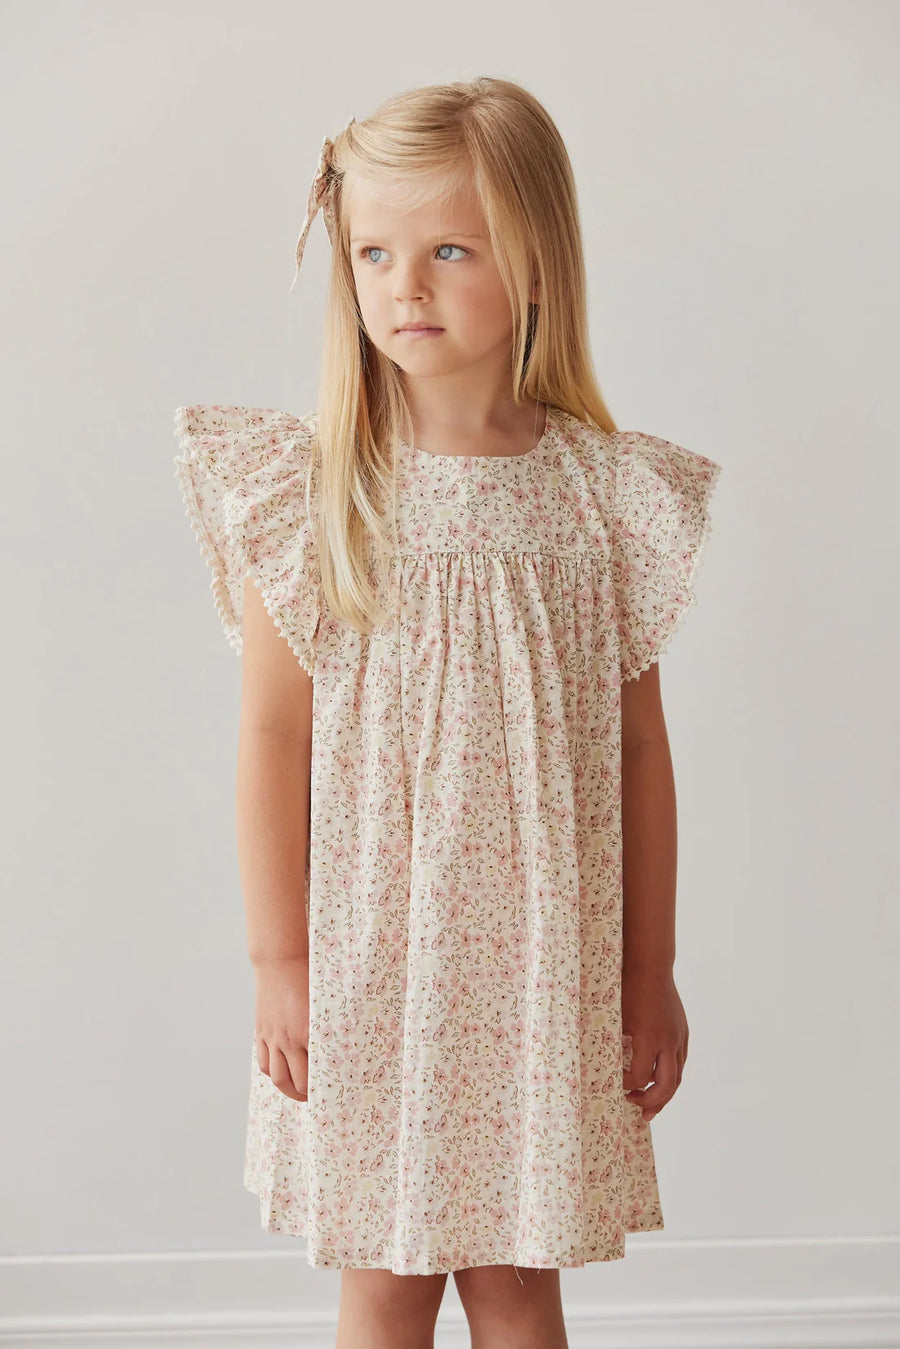 Eleanor fifi floral dress by Jamie Kay